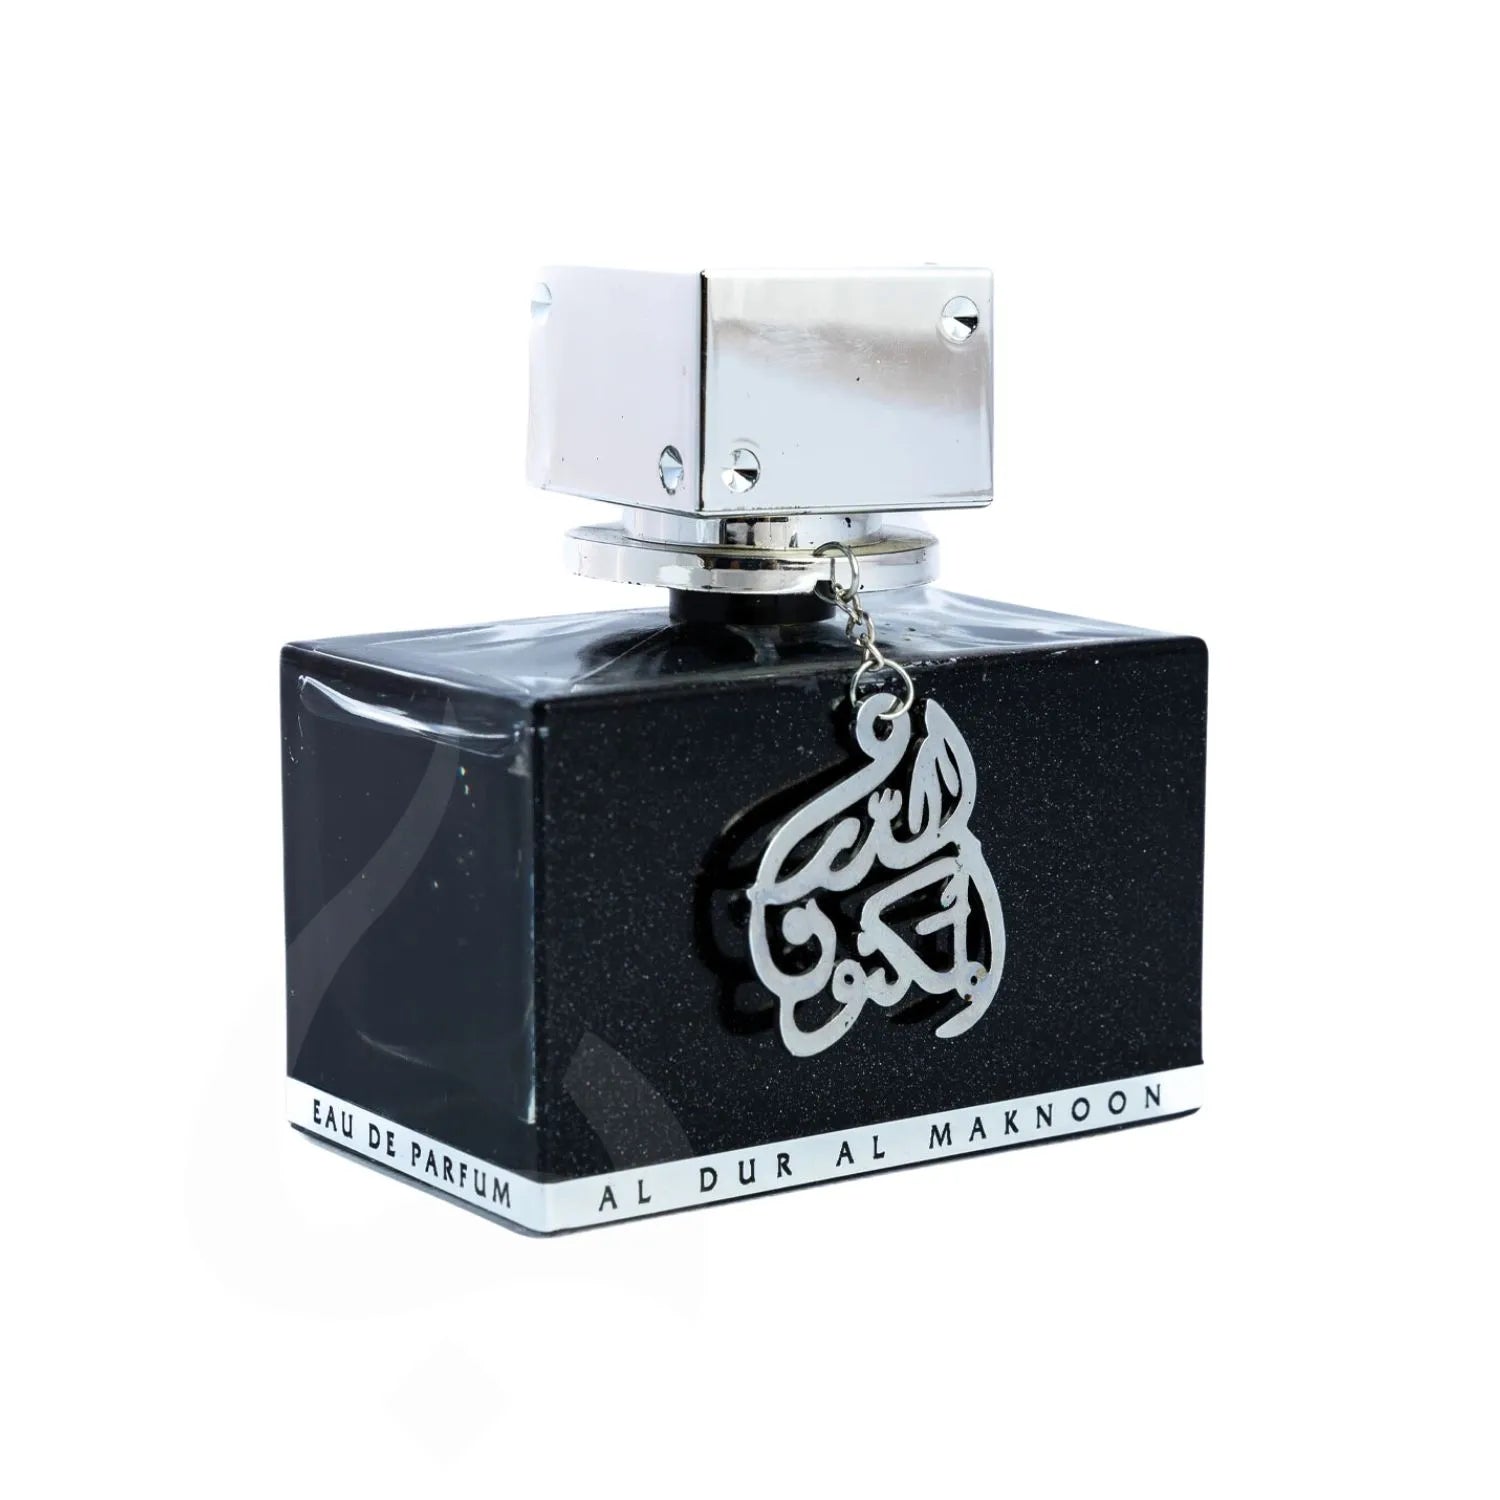 Al Dur Al Maknoon Perfume Main